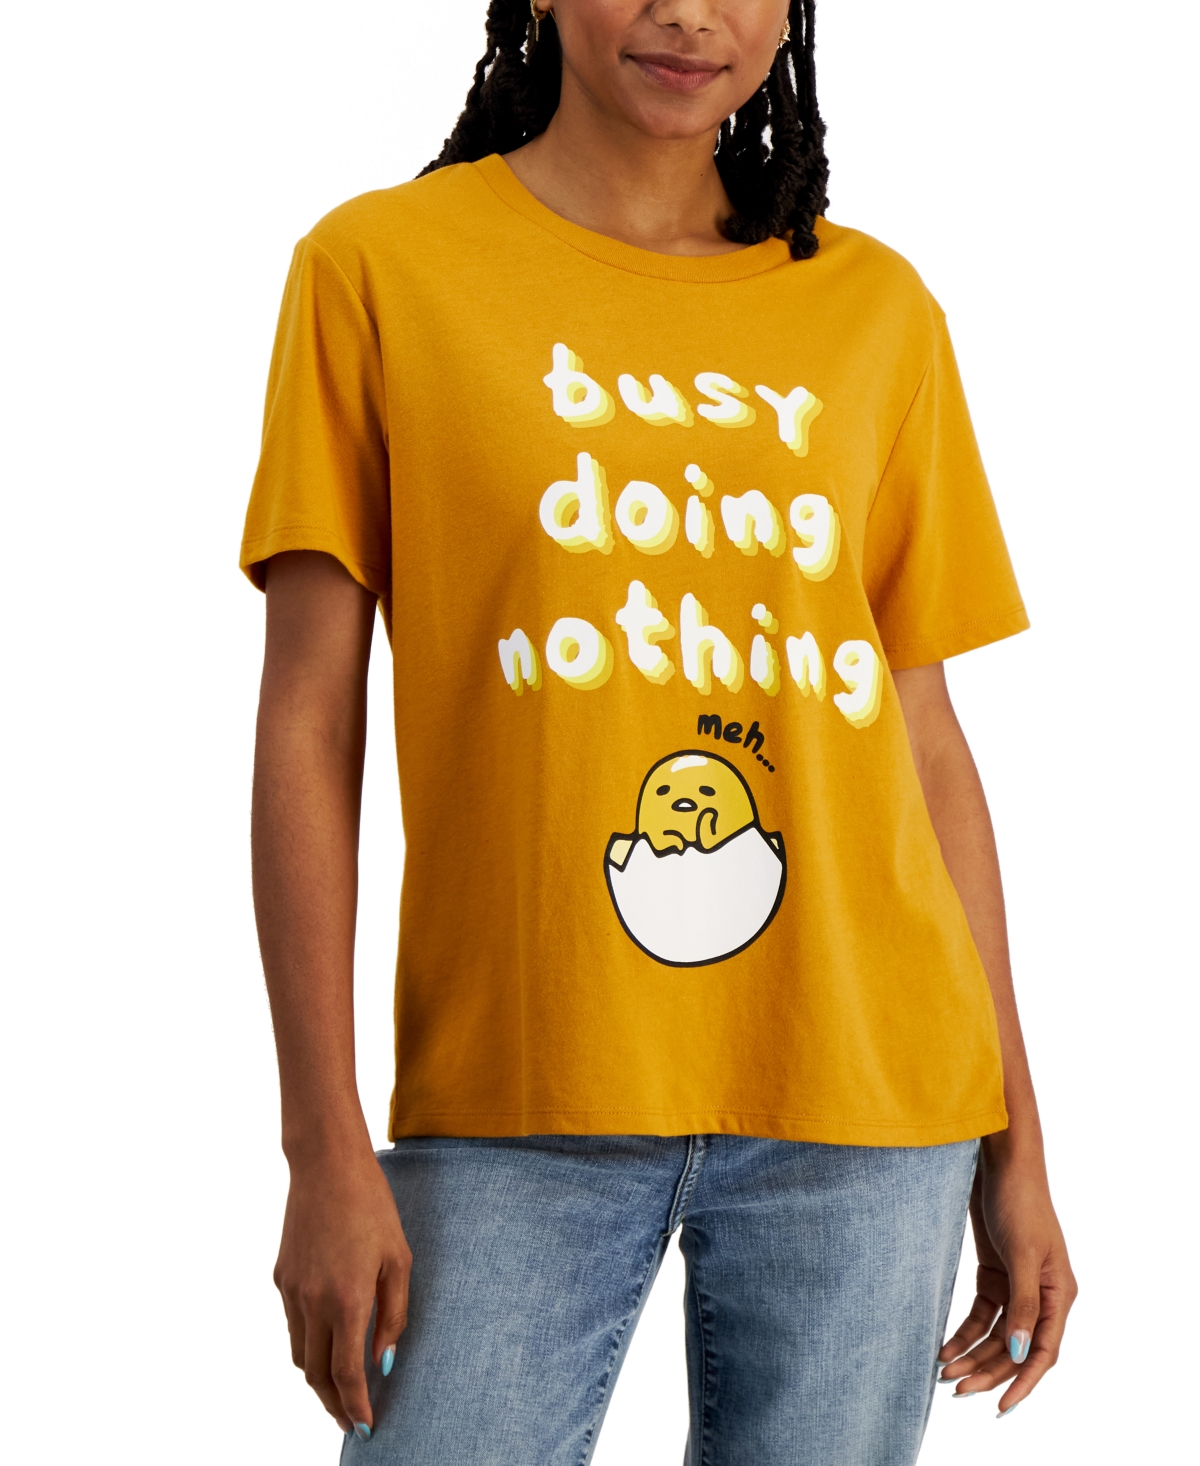 Love Tribe Juniors' Gudetama Busy Doing Nothing T-Shirt